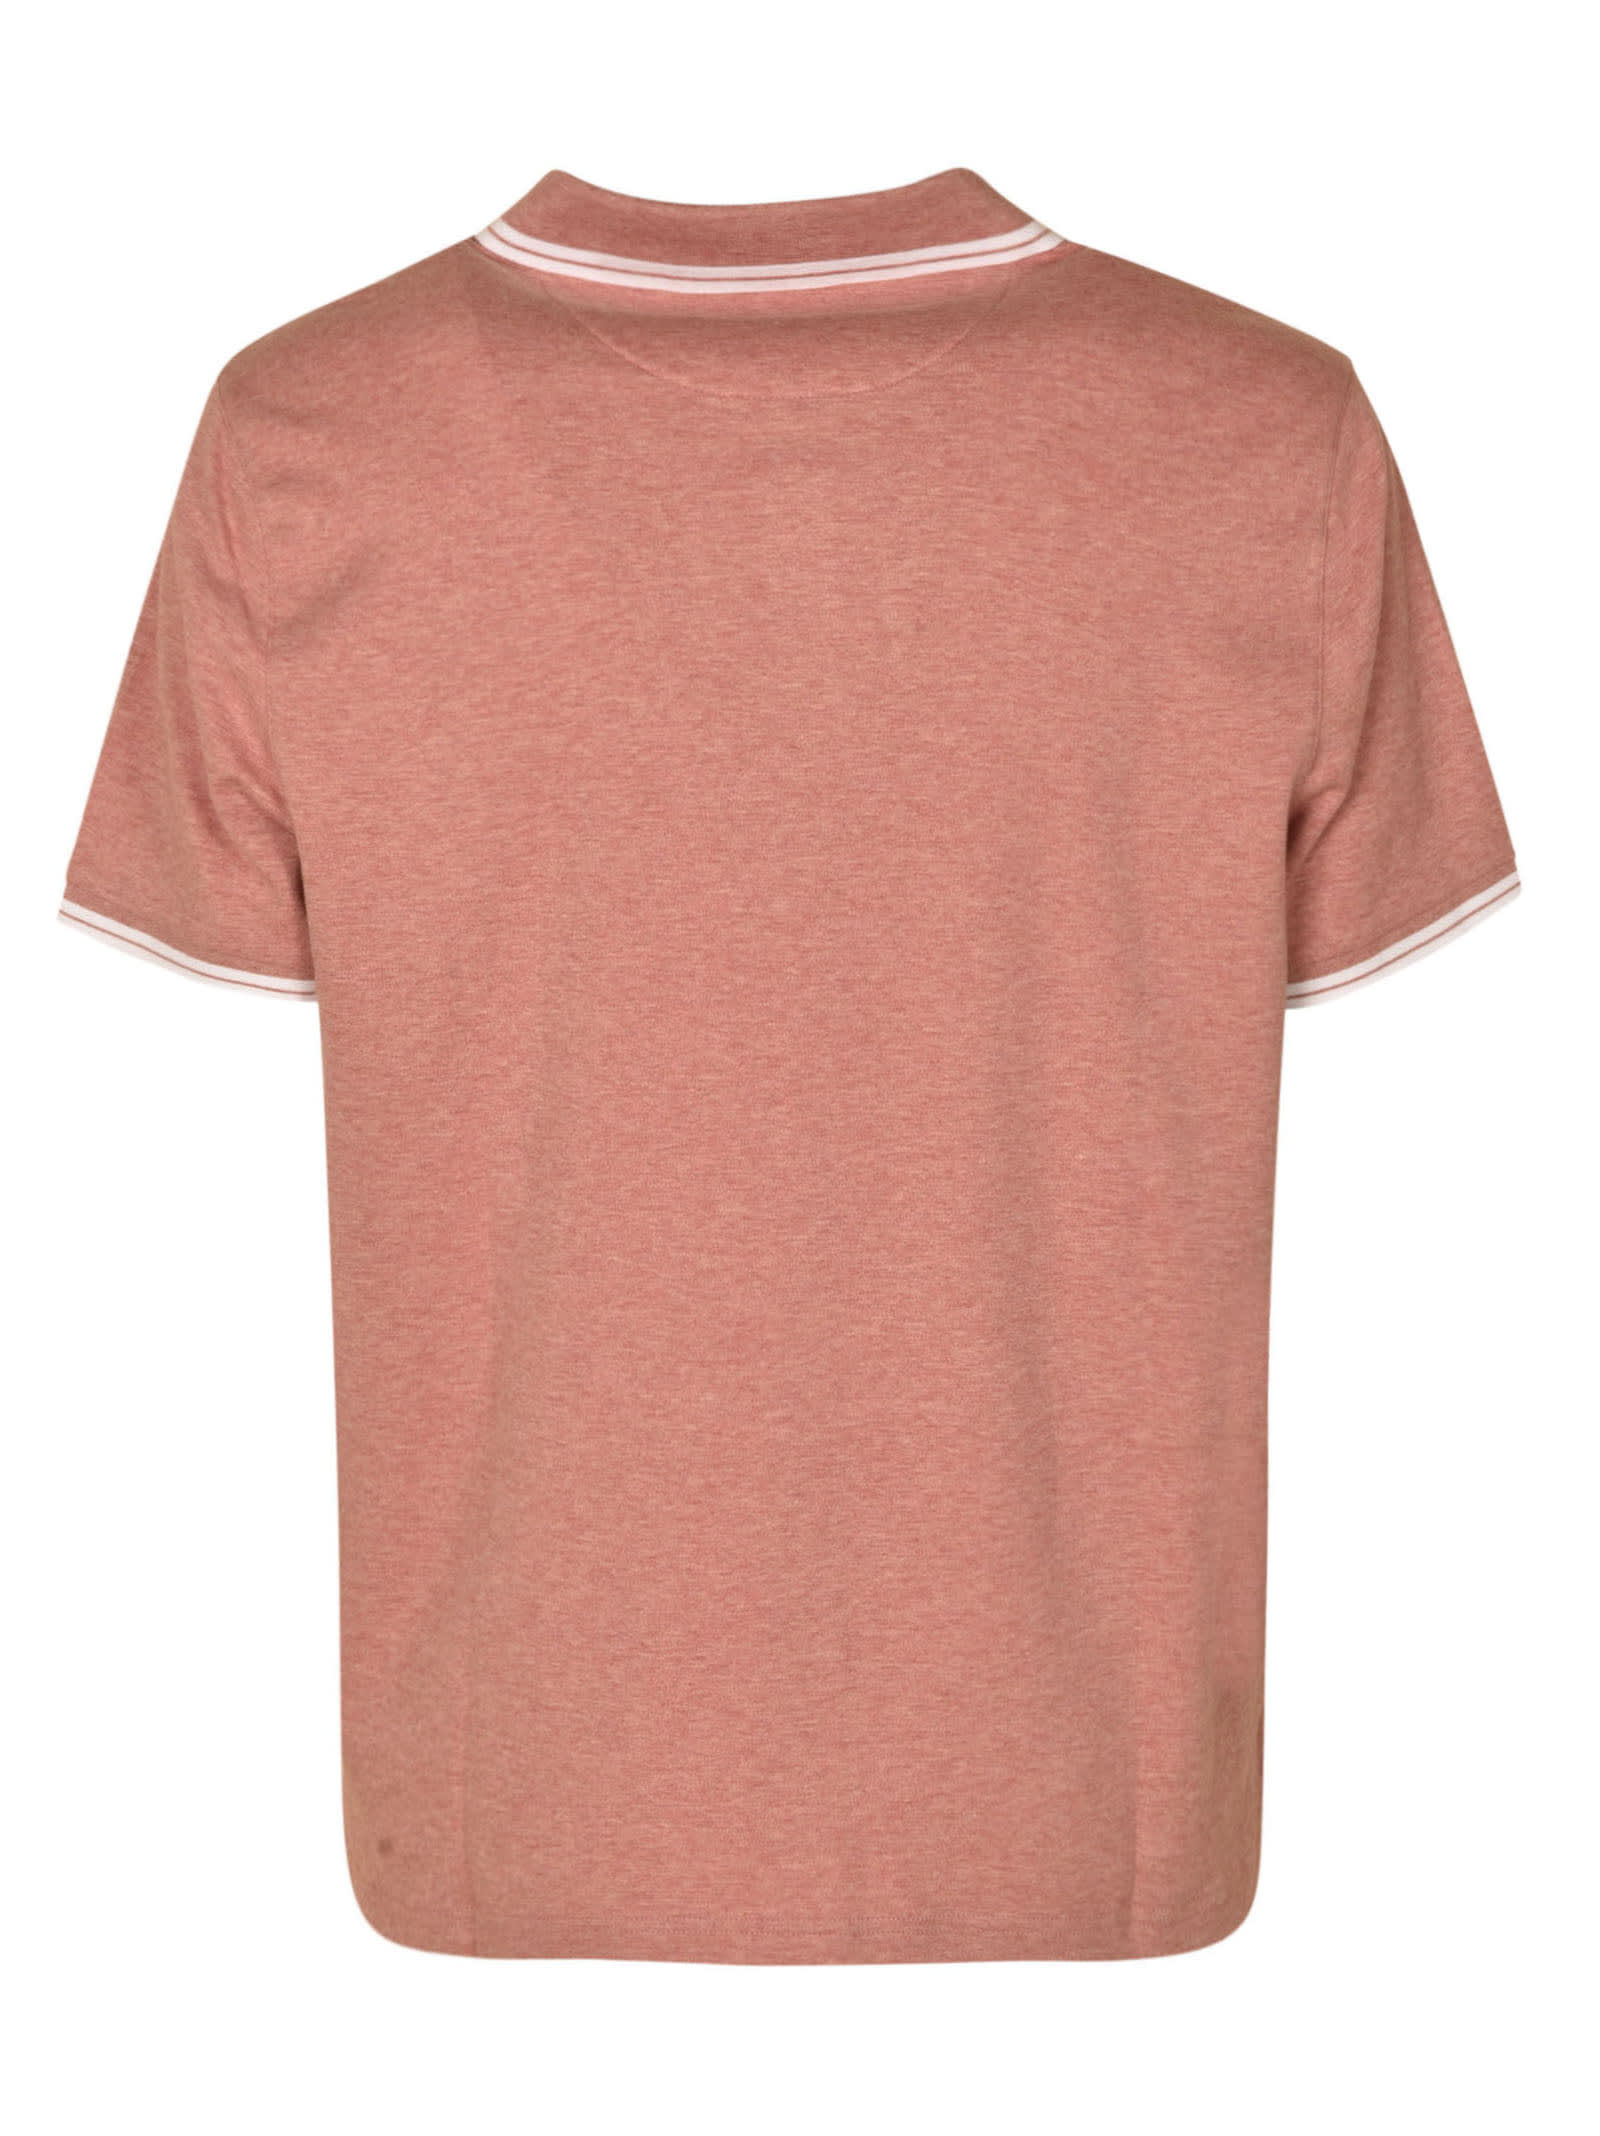 Michael Kors Greenwich Polo T Shirt Pink